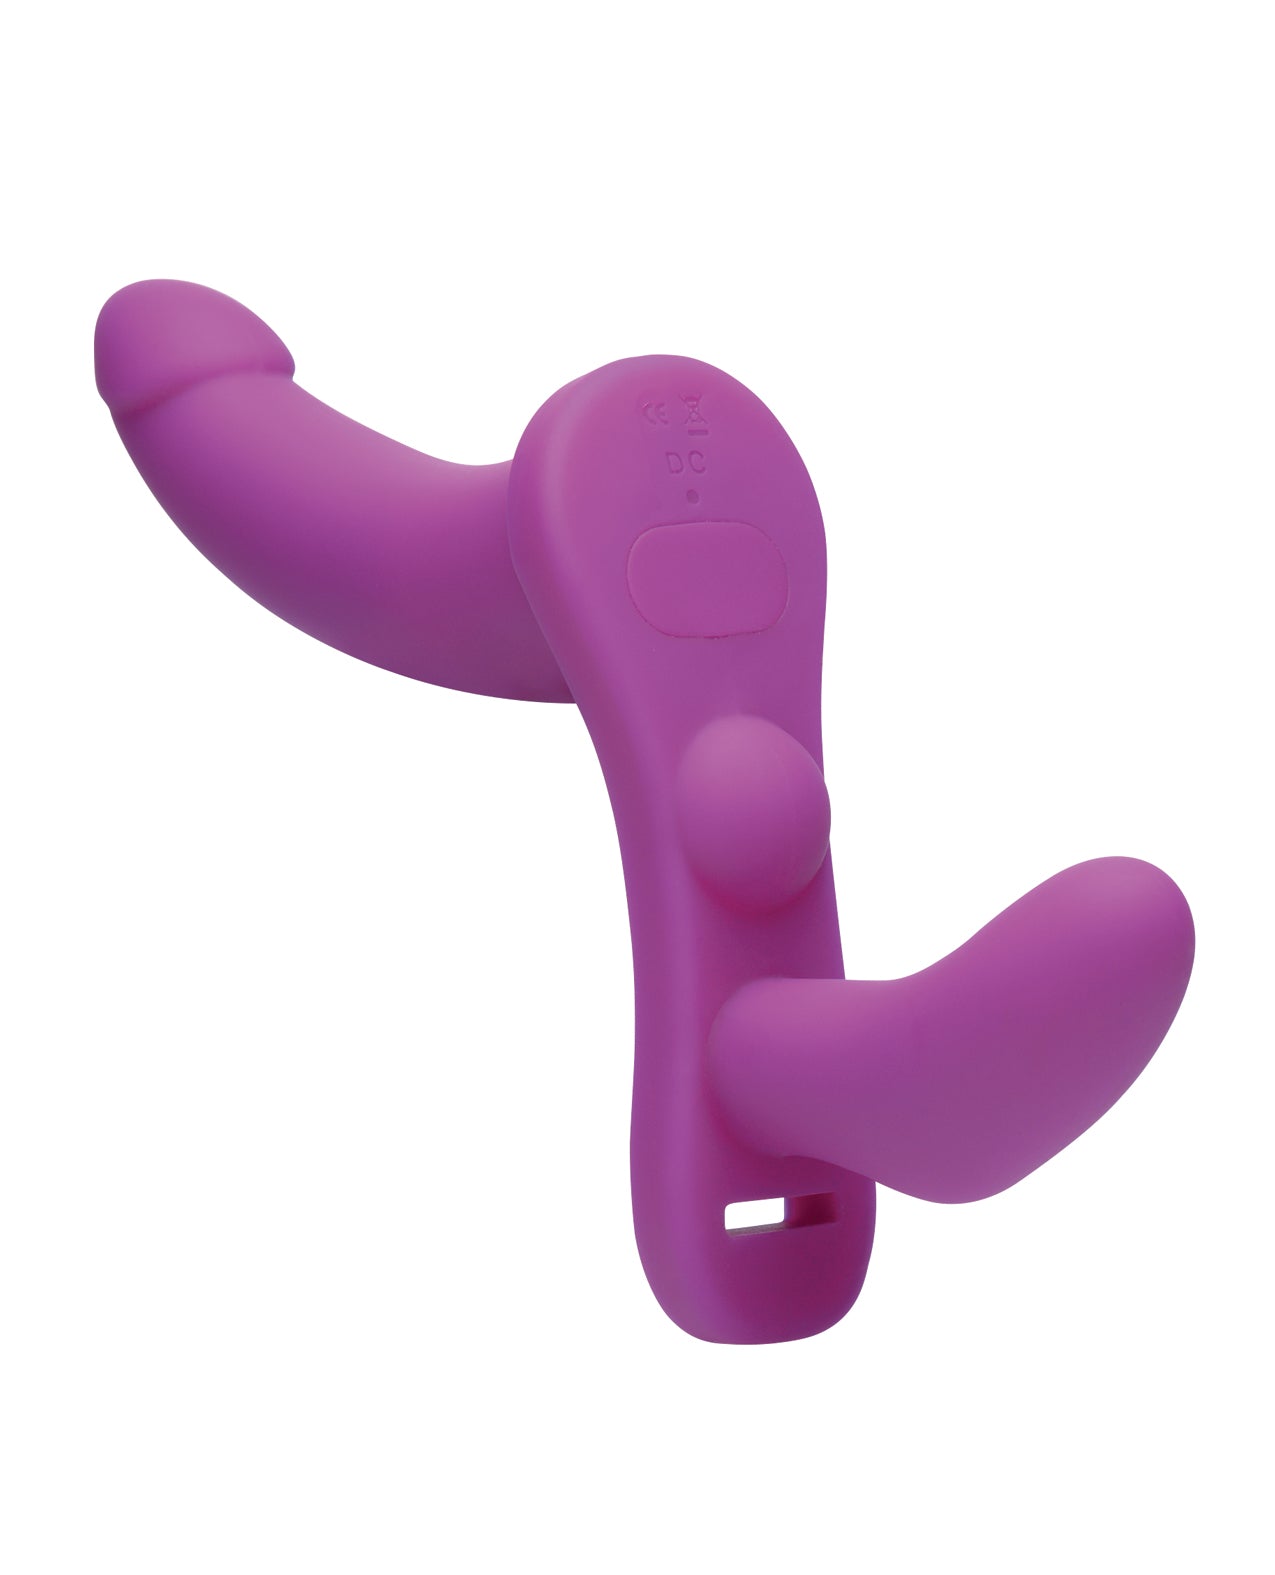 Strap U Double Take Double Penetration Vibrating Strap On Harness - Purple - Bossy Pearl